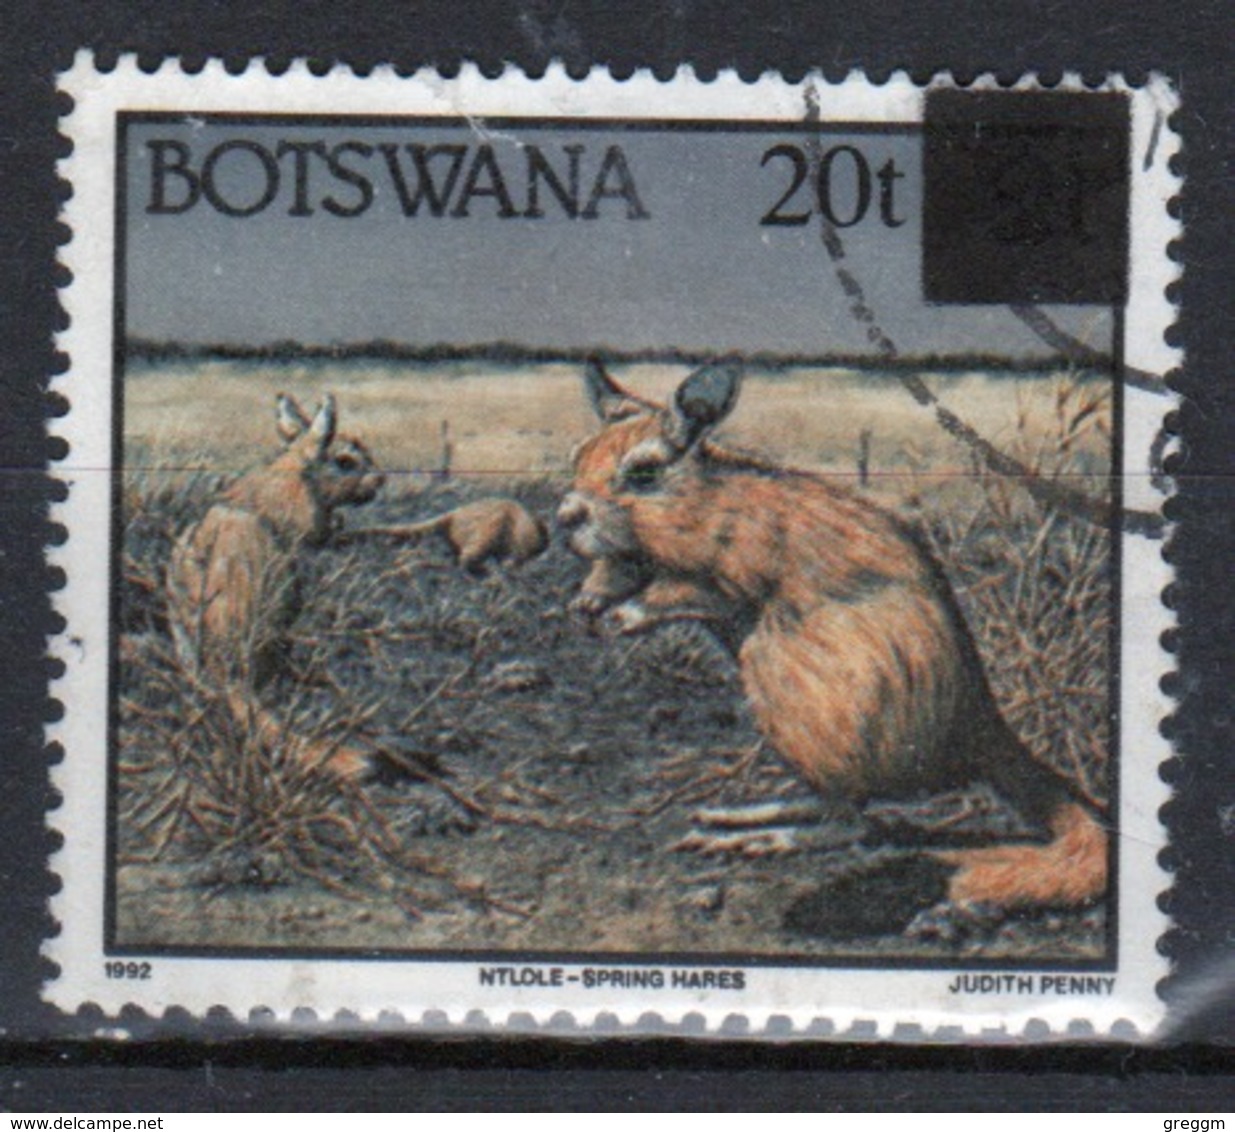 Botswana 1996 Single 20t Overprinted Commemorative Stamp From The Animal Set. - Botswana (1966-...)